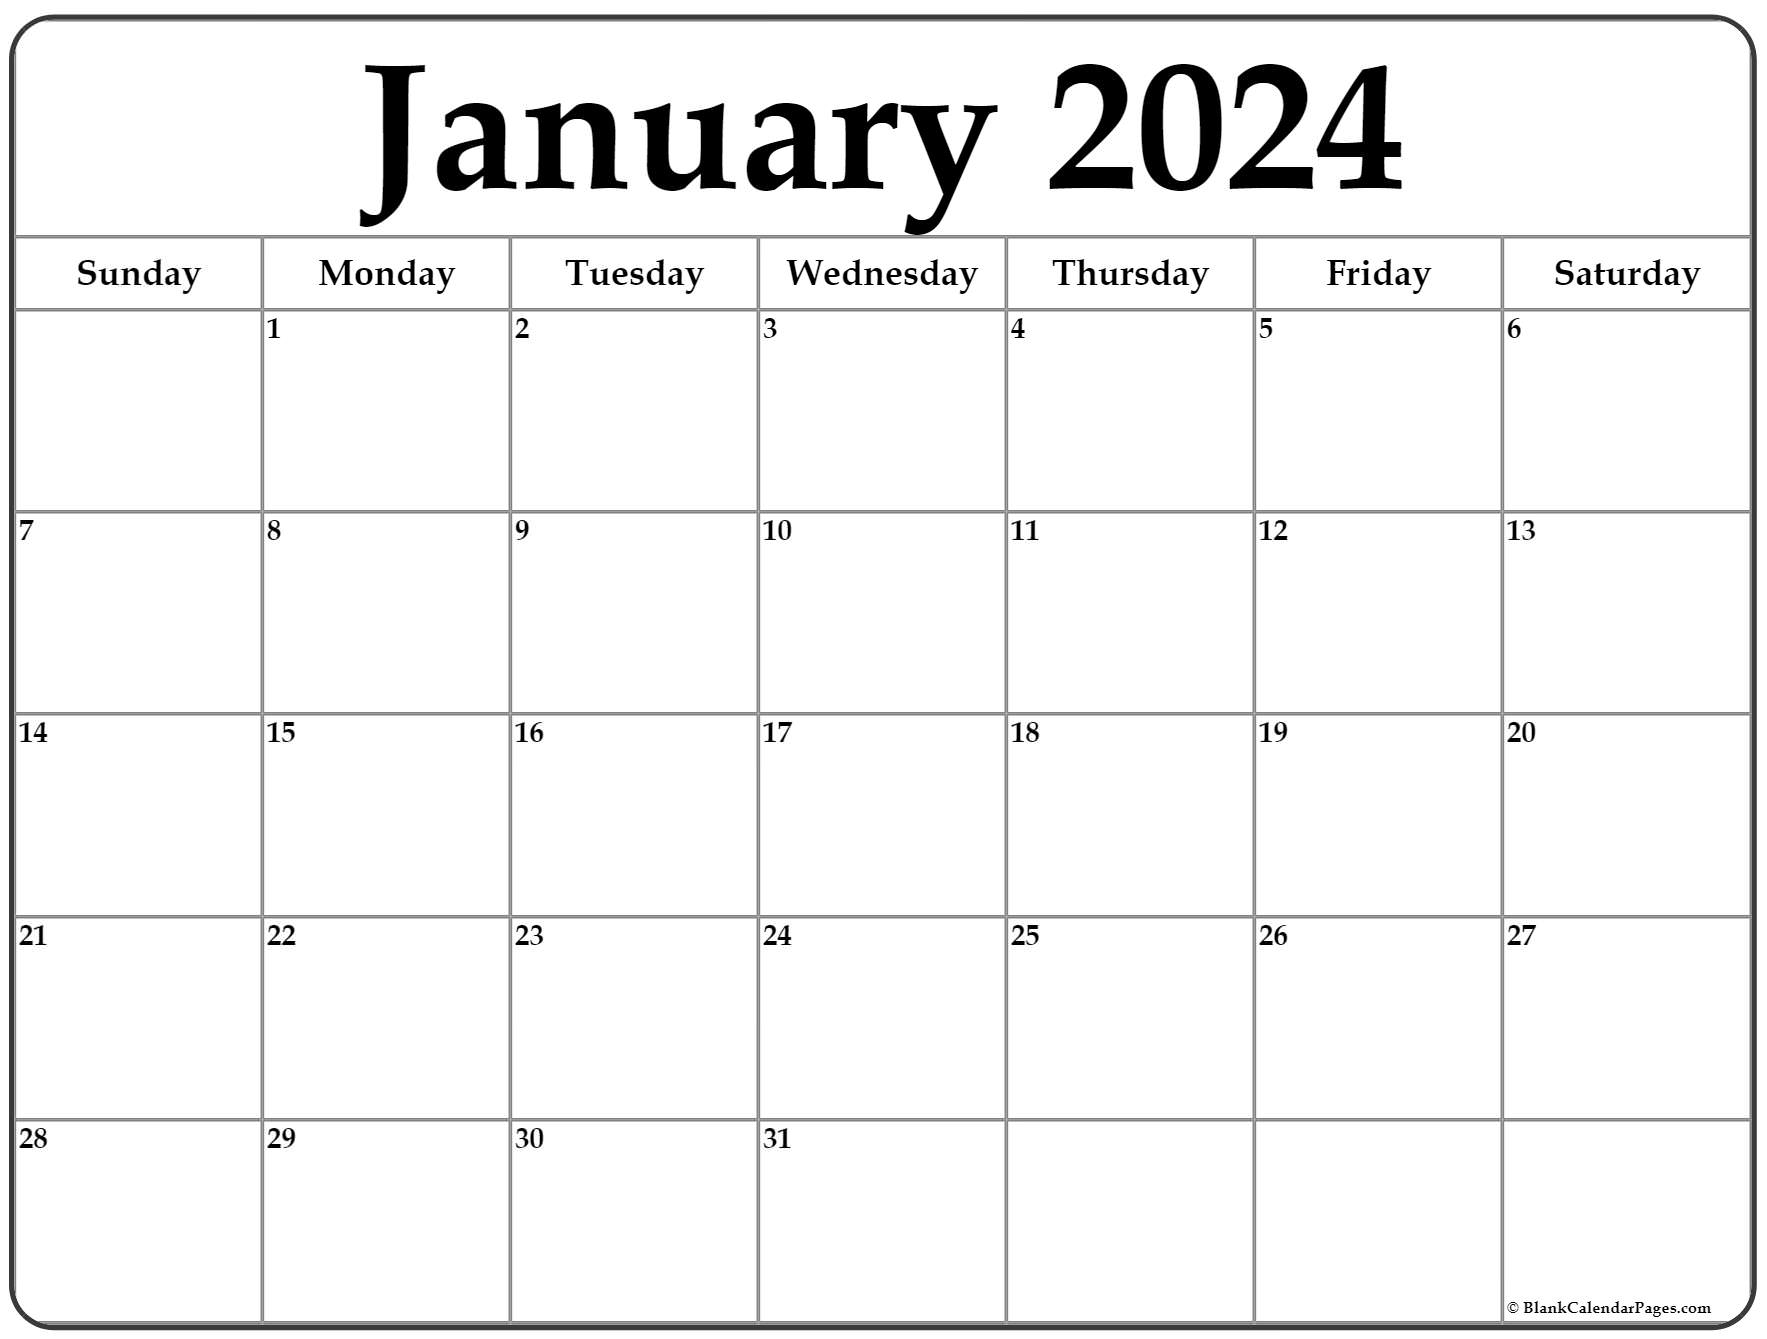 January 2024 Calendar | Free Printable Calendar for 2024 Free Printable Calendar By Month